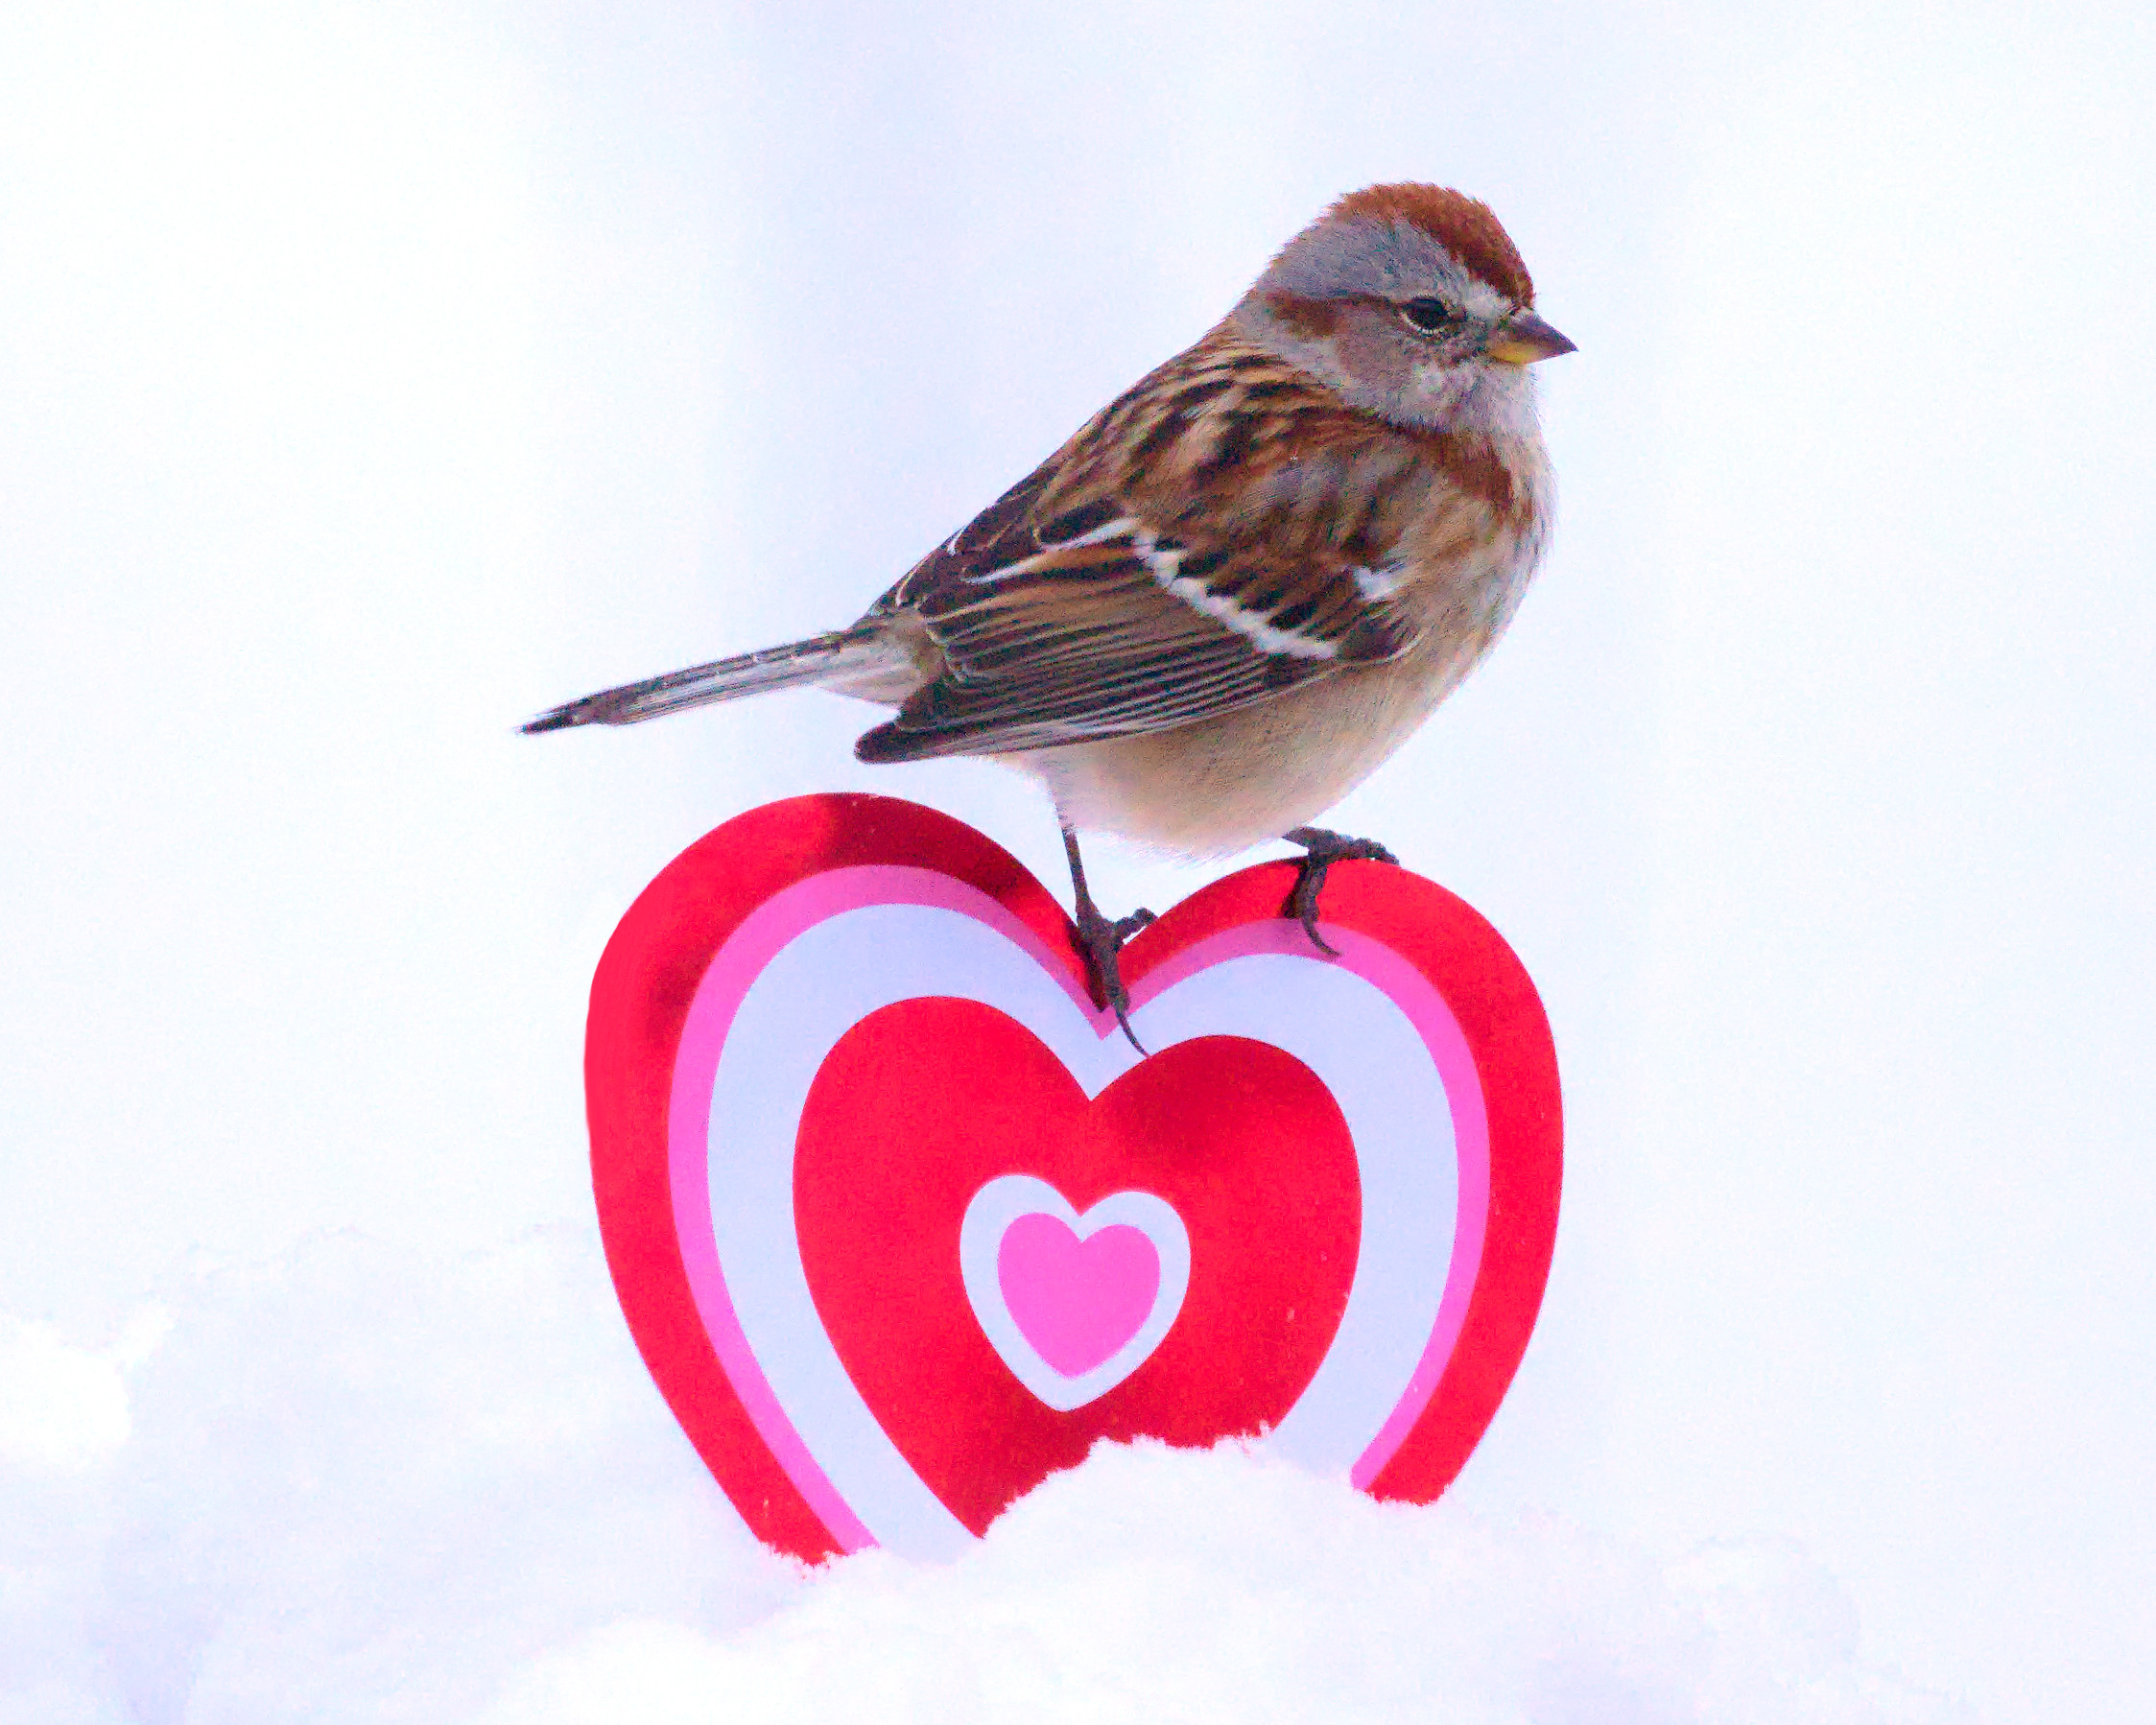 American Tree Sparrow on a Valentine